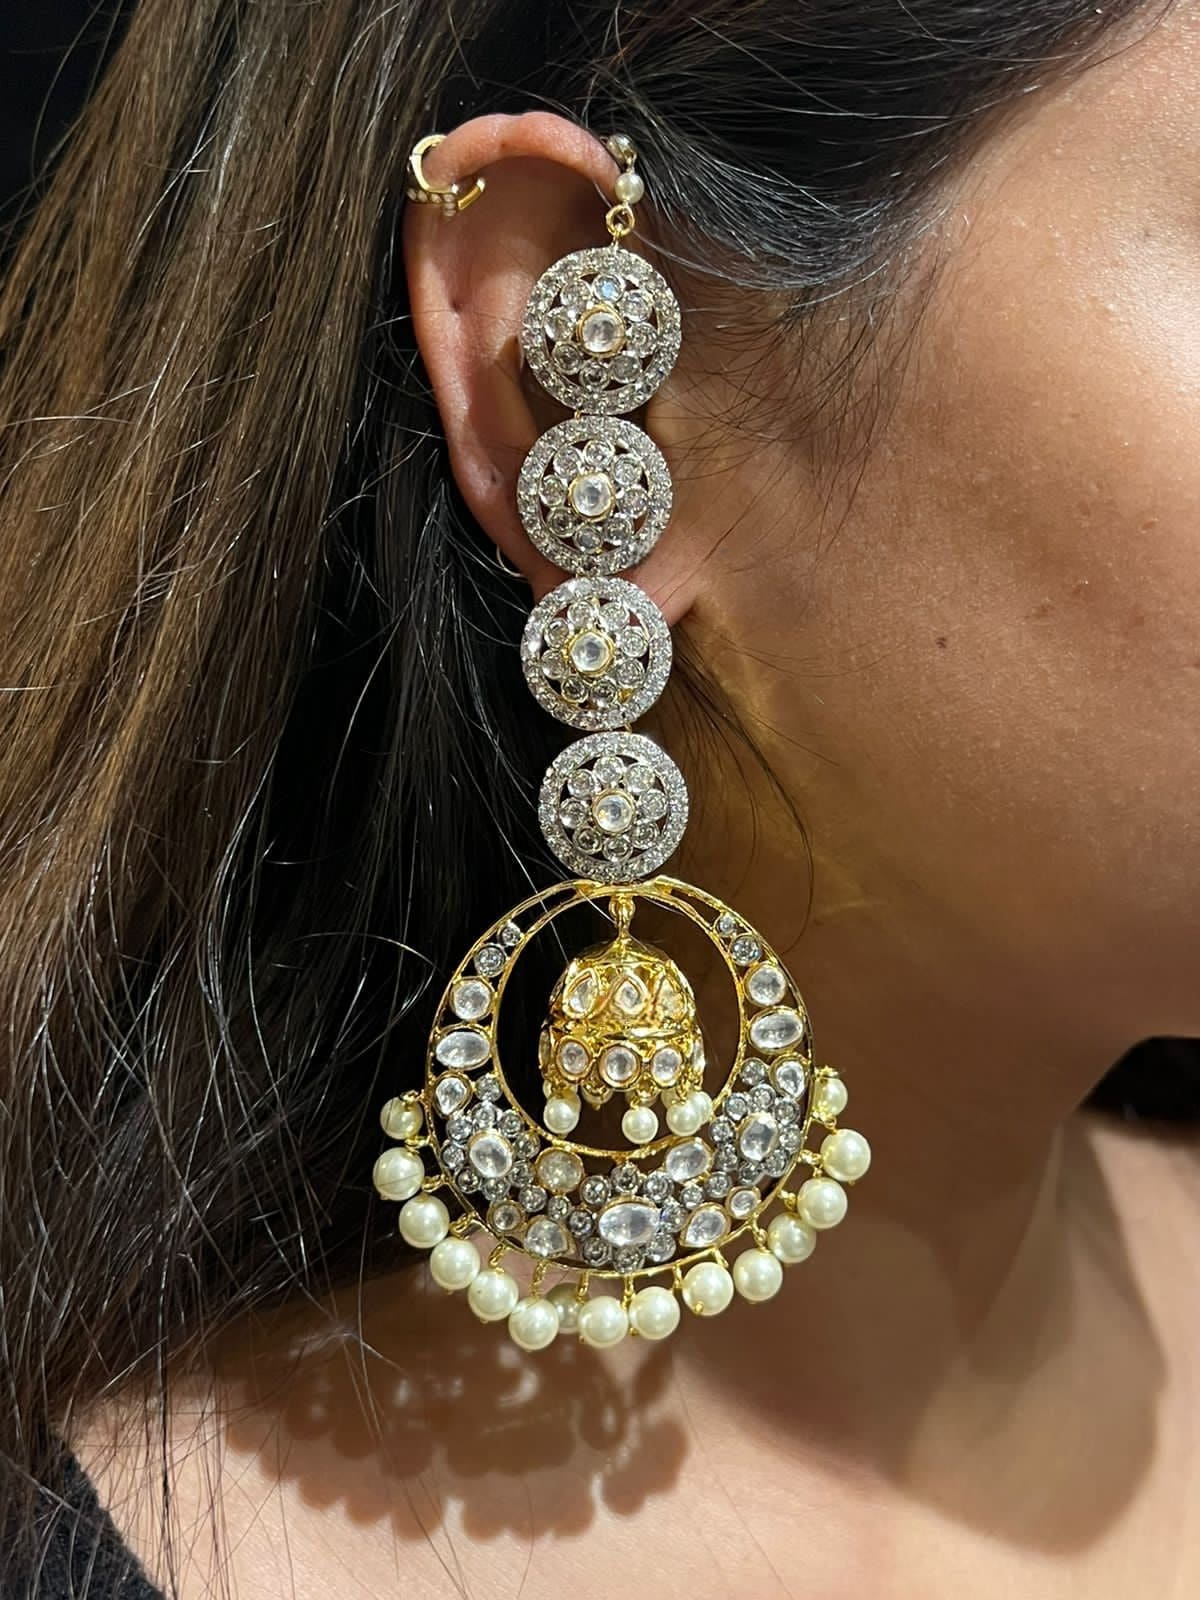 321 Long Earrings Wedding Indian Images Stock Photos  Vectors   Shutterstock